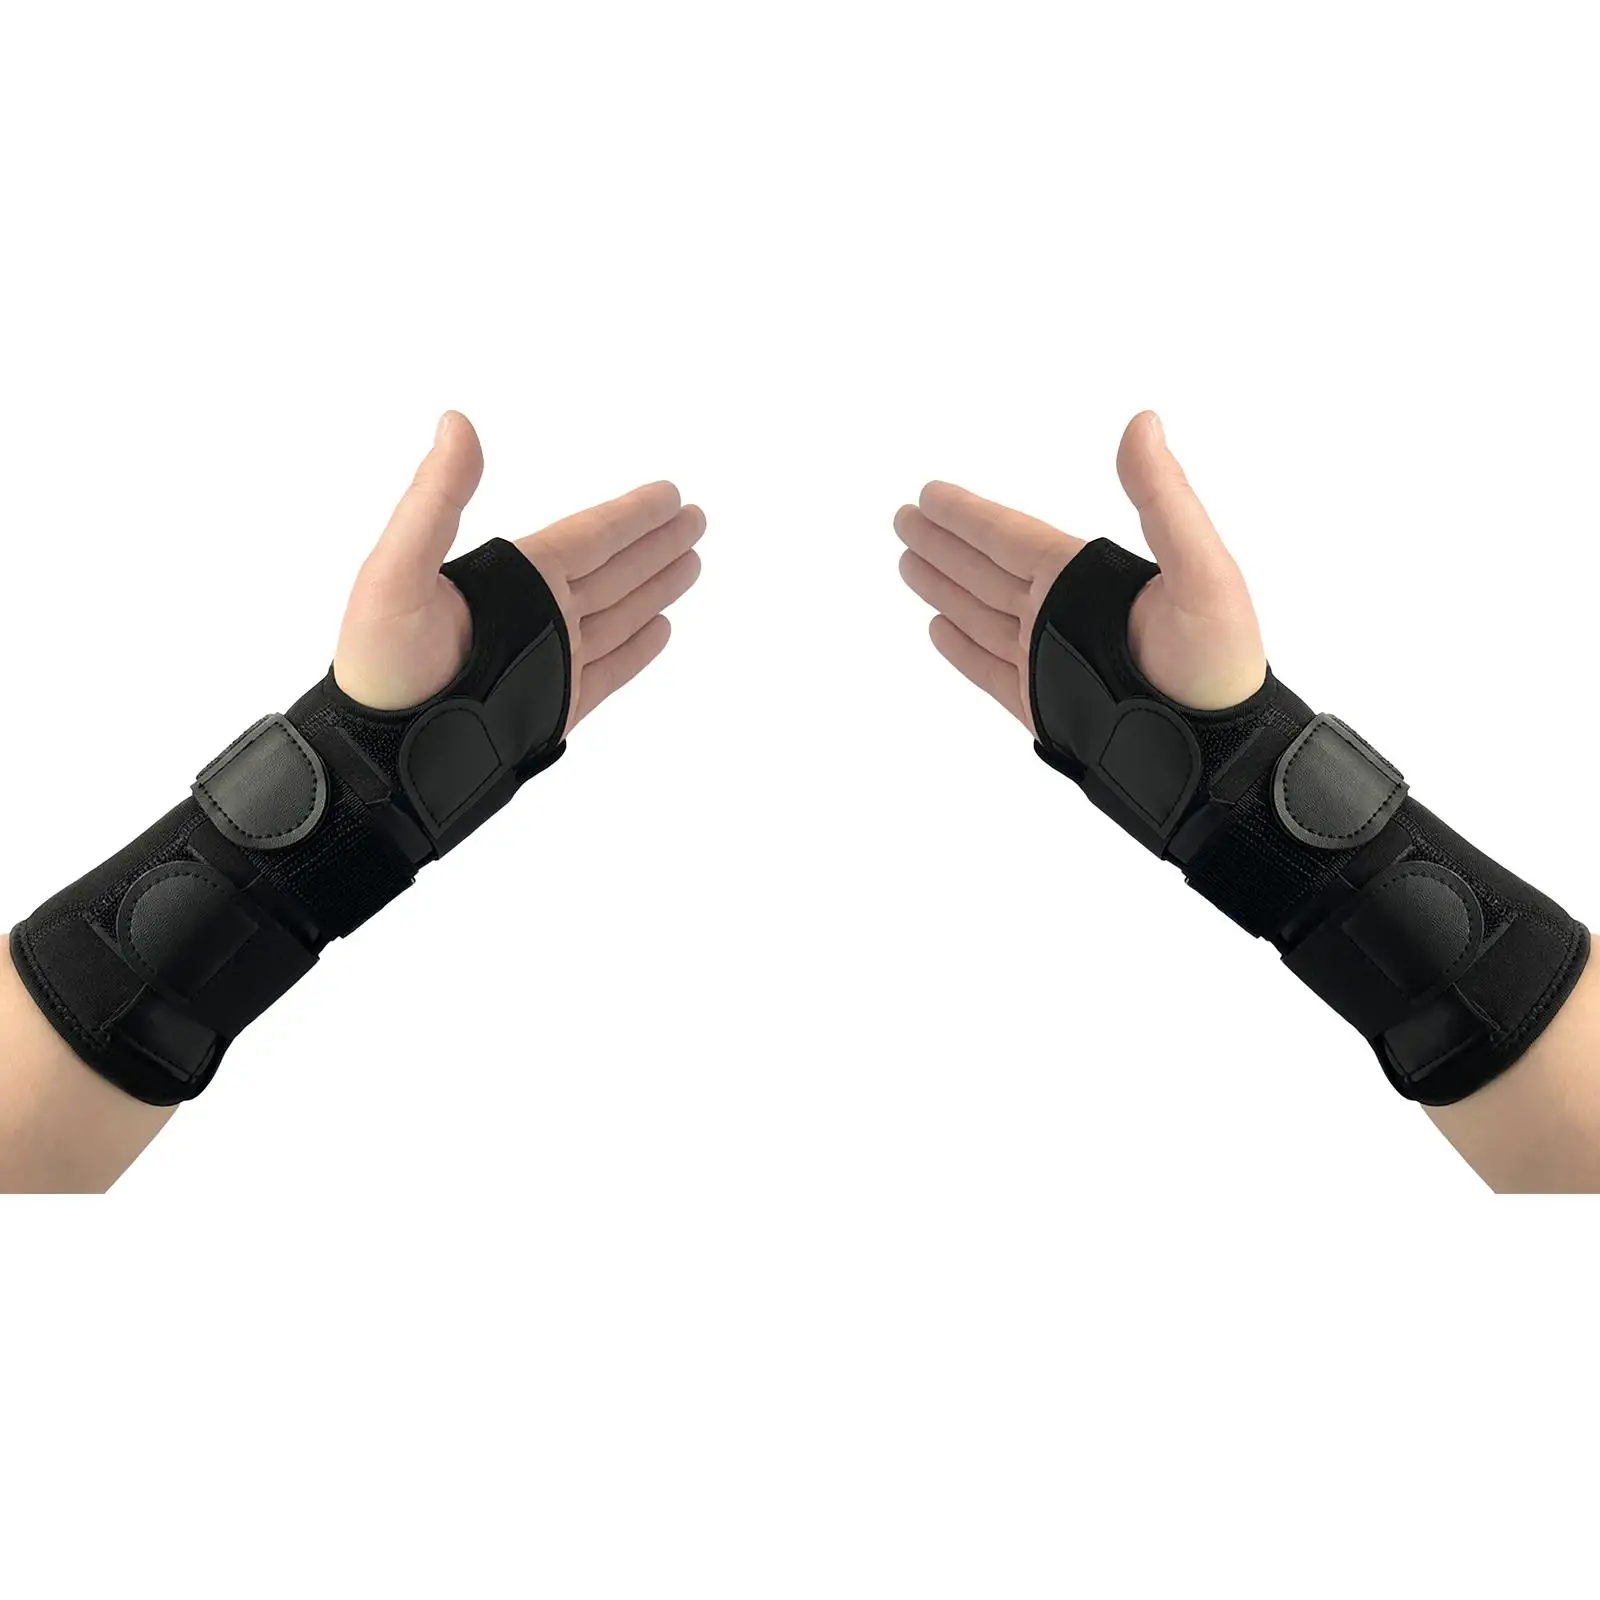 Wrist  Wrist Wraps Wrist Guard Wrist Support Strap for Exercise Biking